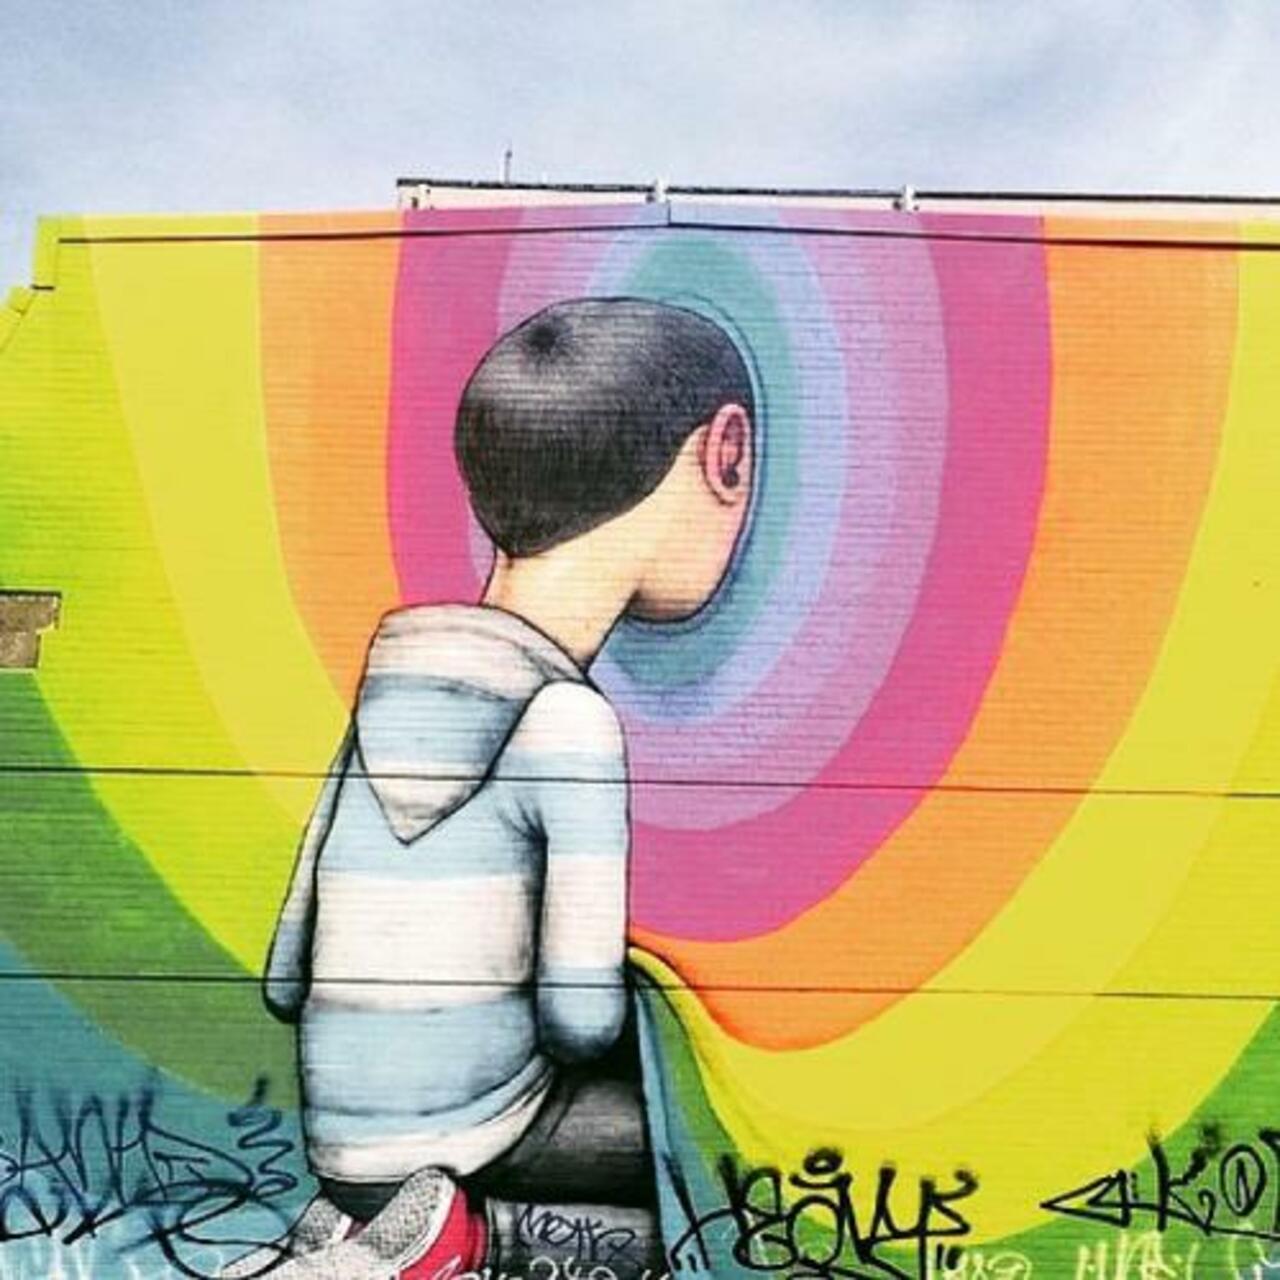 RT @Zang_Media: #urbanwalls #urbanart #urbano #urban #photo #graffiti #streetart... #InspireArt - - http://wp.me/p6qjkV-3qm http://t.co/hmkxCm99gD